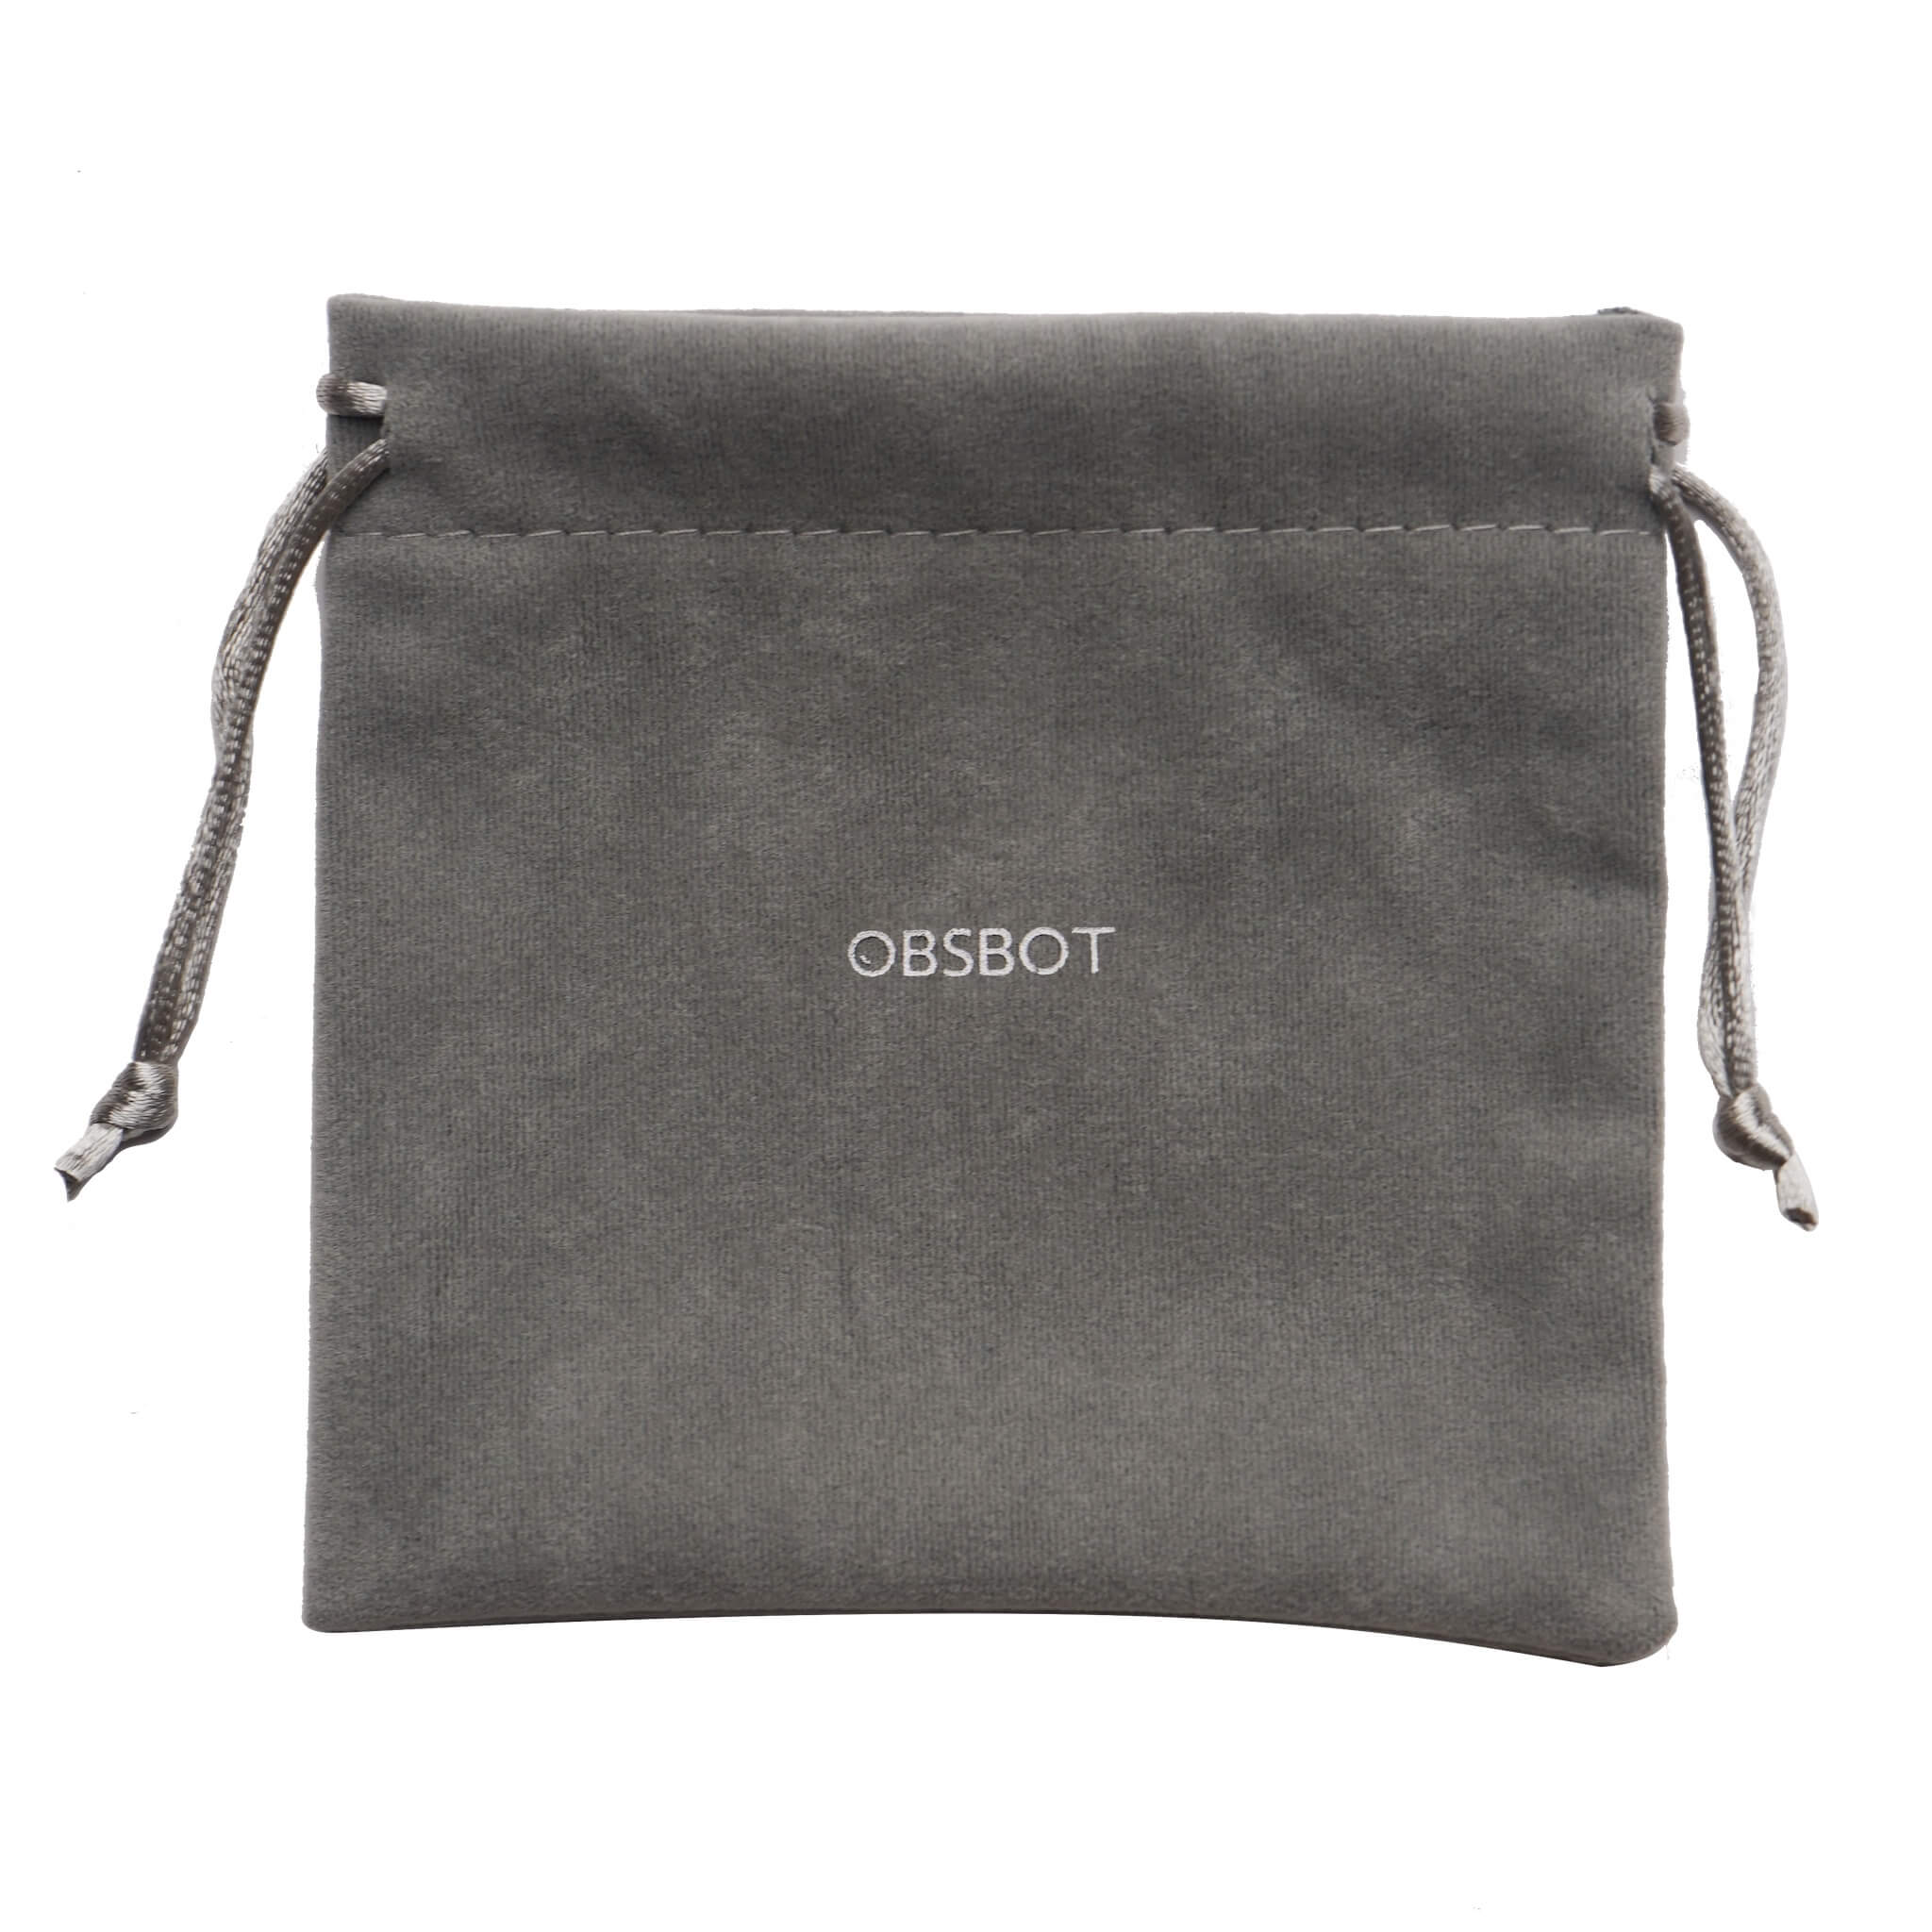 OBSBOT Meet camera traveling bag